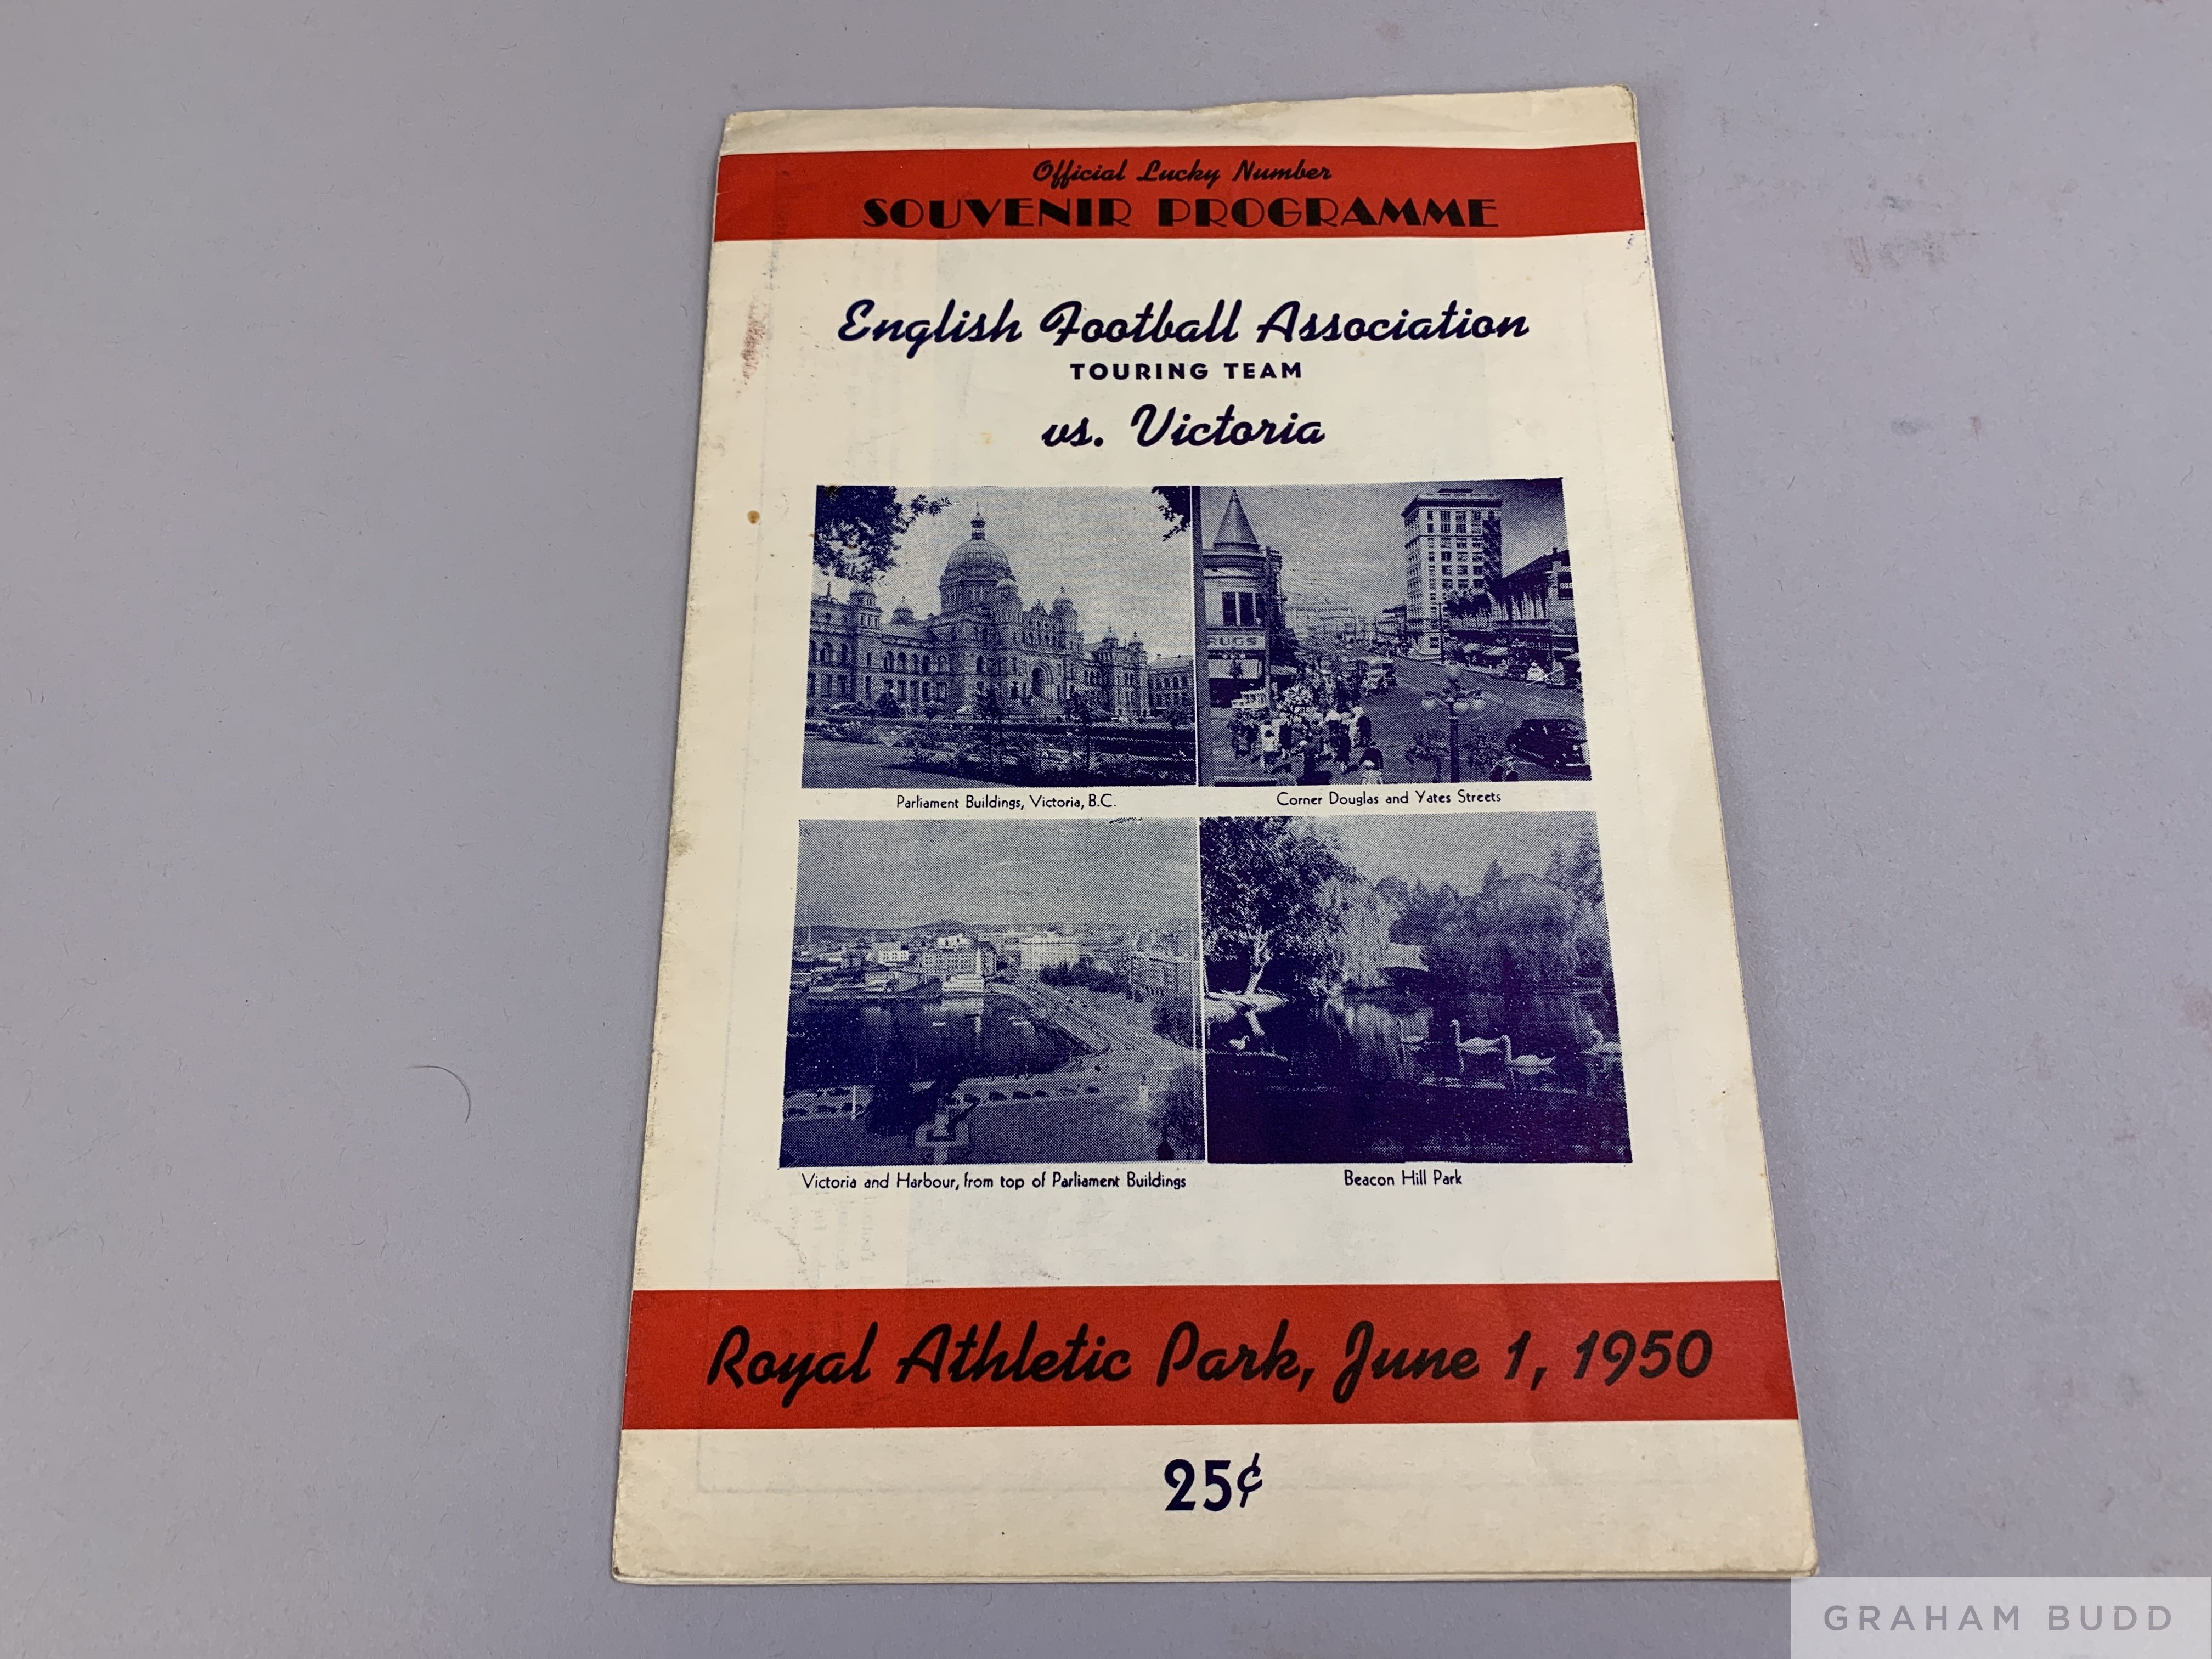 Victoria v. English Football Association, Tour Match Programme, 1950